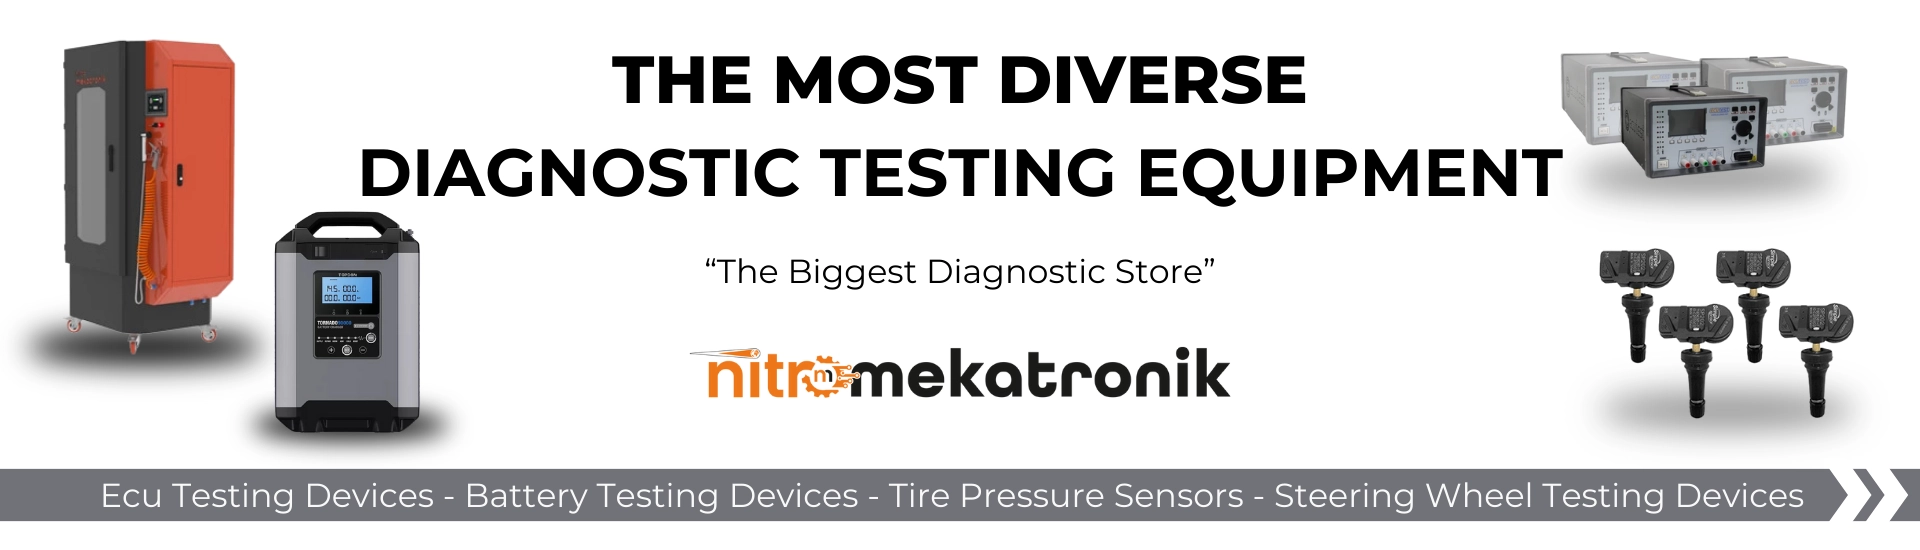 the-most-diverse-diagnostic-testing-equipment-mobil